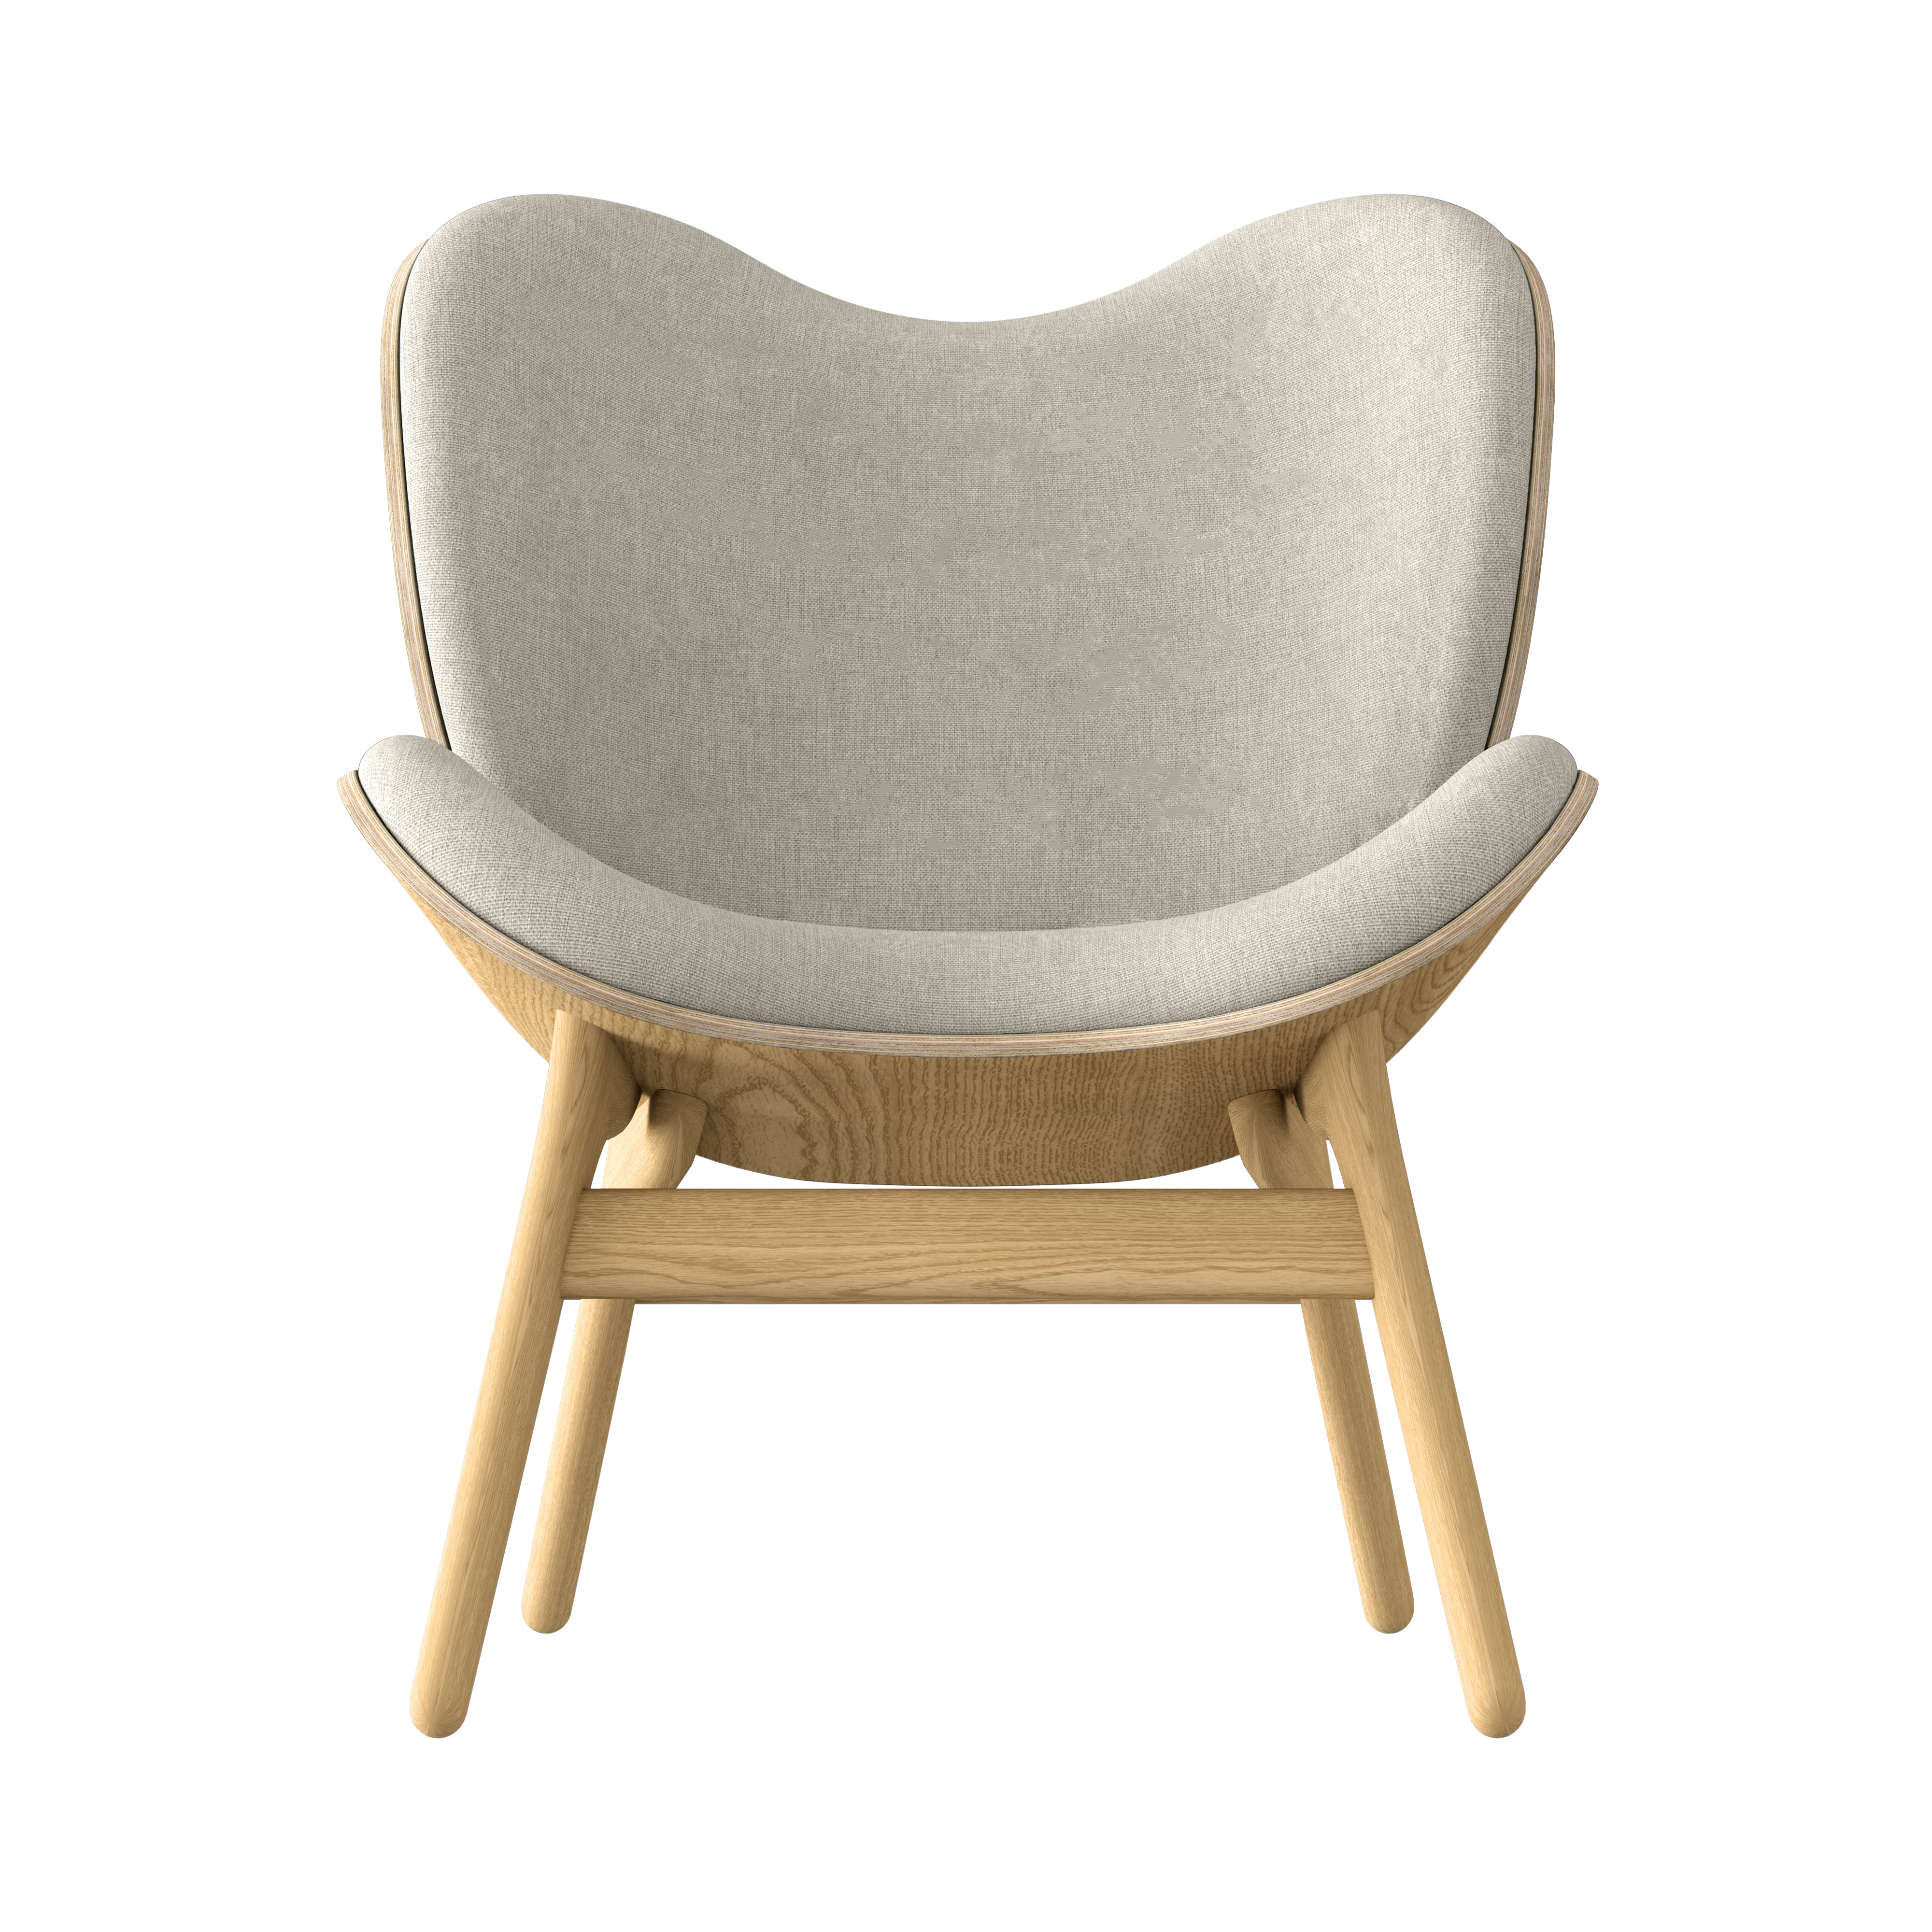 A Conversation Piece Lounge Chair: Oak + White Sand